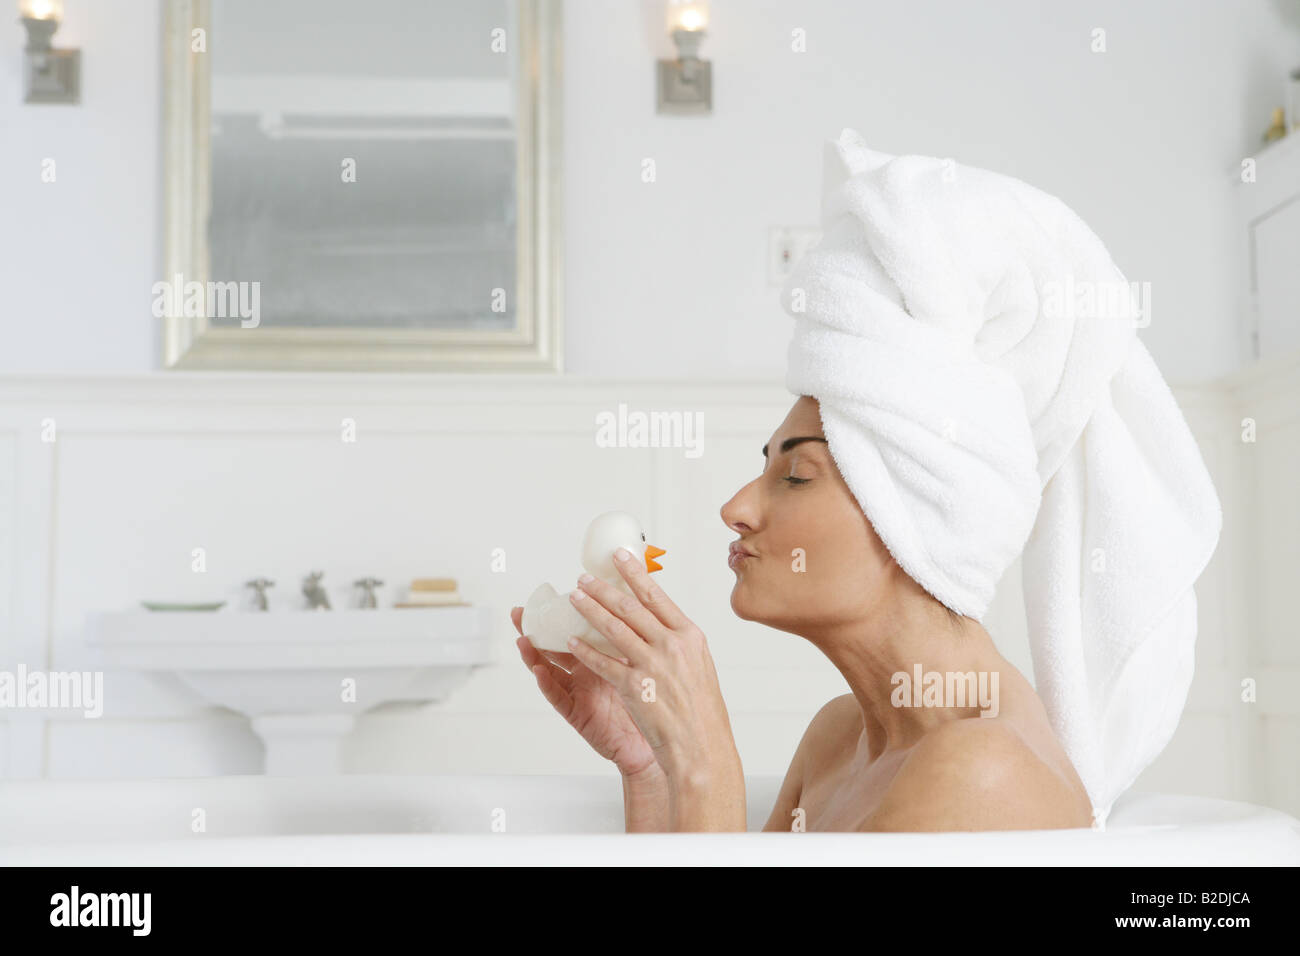 Woman in bathtub kissing rubber duck. Stock Photo